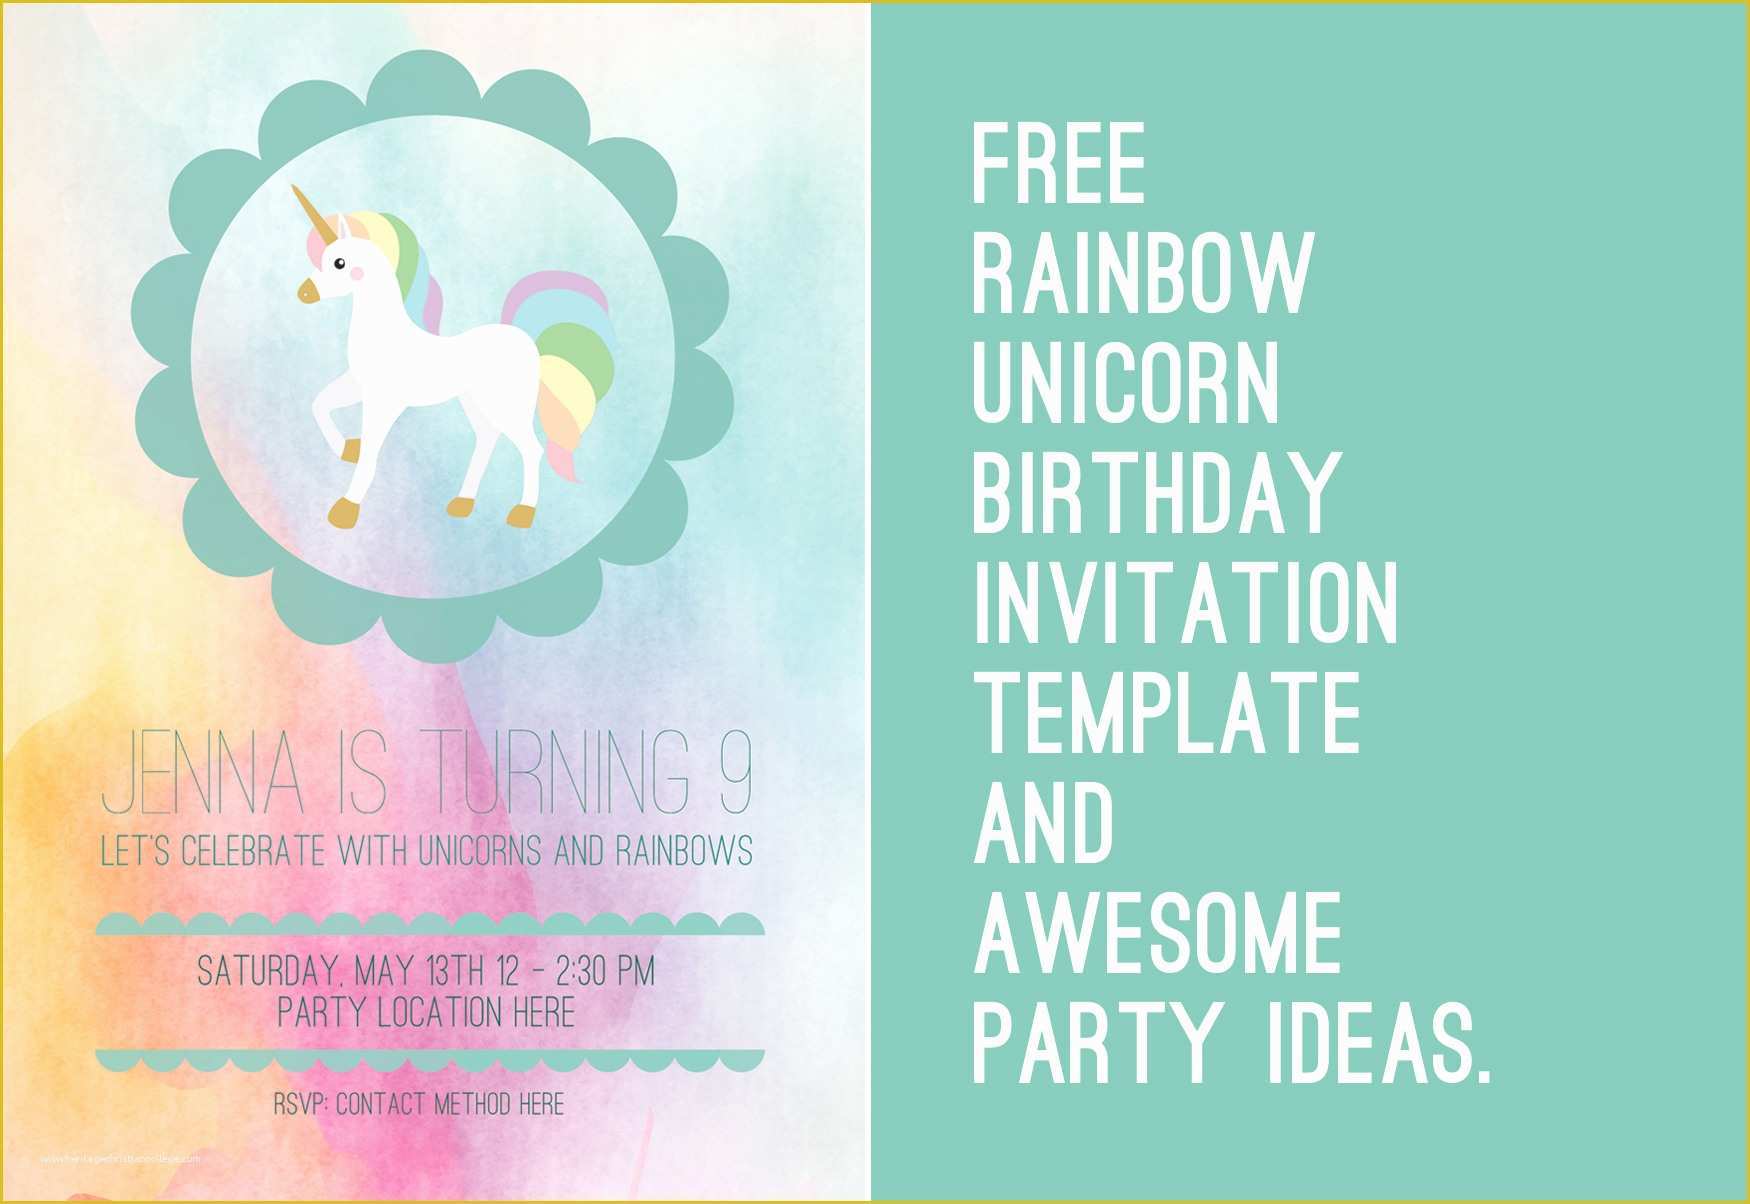 Unicorn Party Invitations Free Template Of A Unicorn and Rainbow Birthday